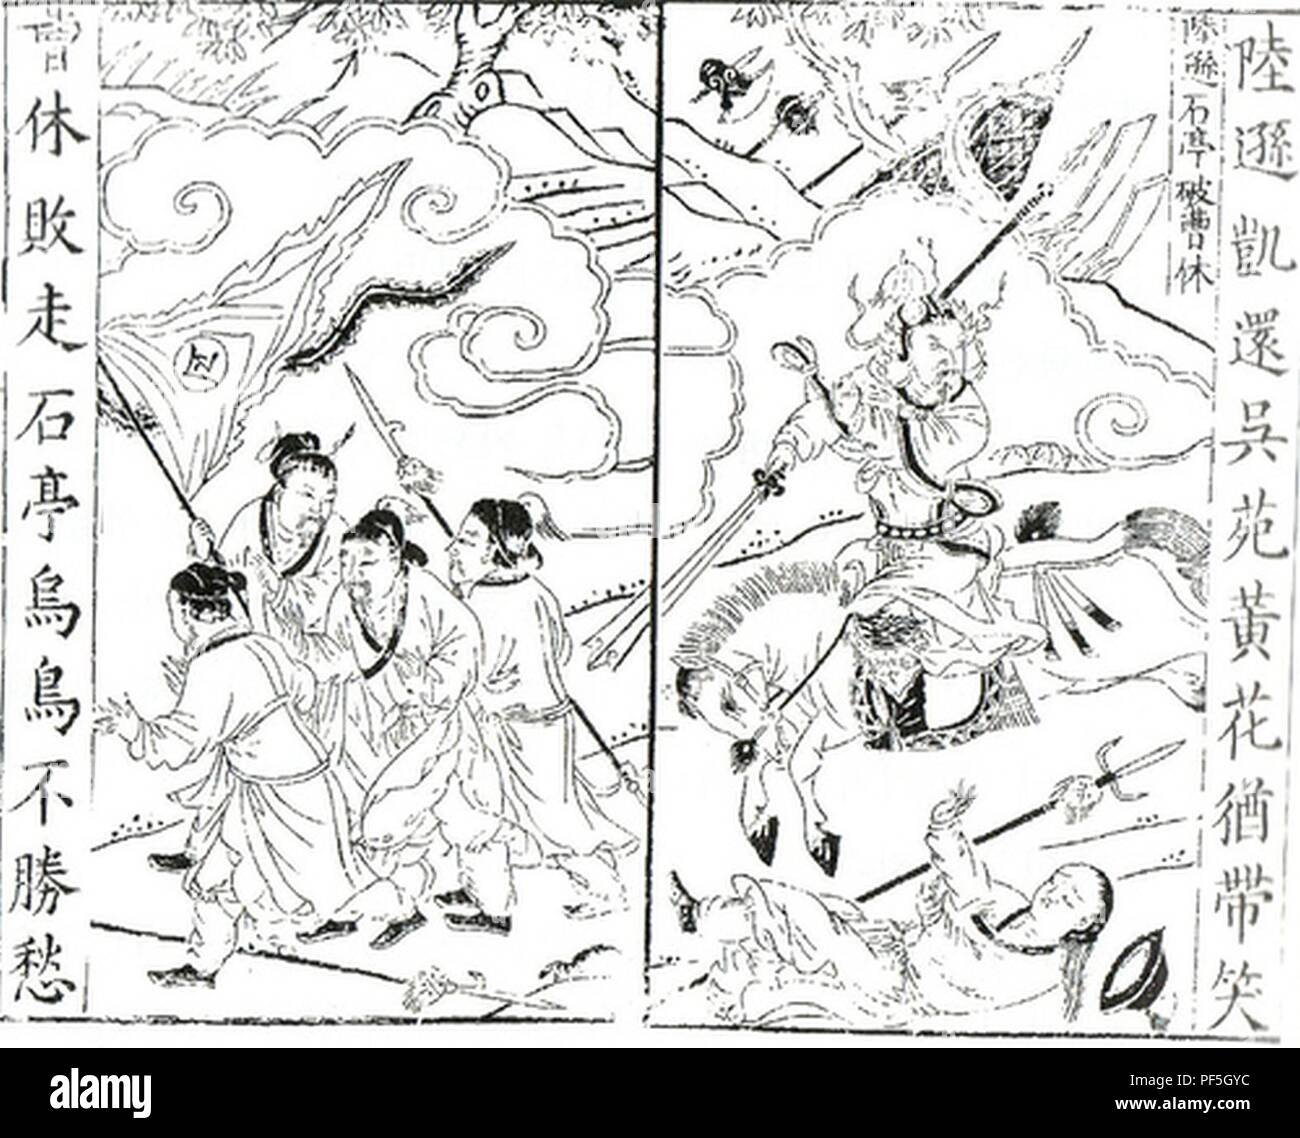 At Shiting Lu Xun defeats Cao Xiu. Stock Photo